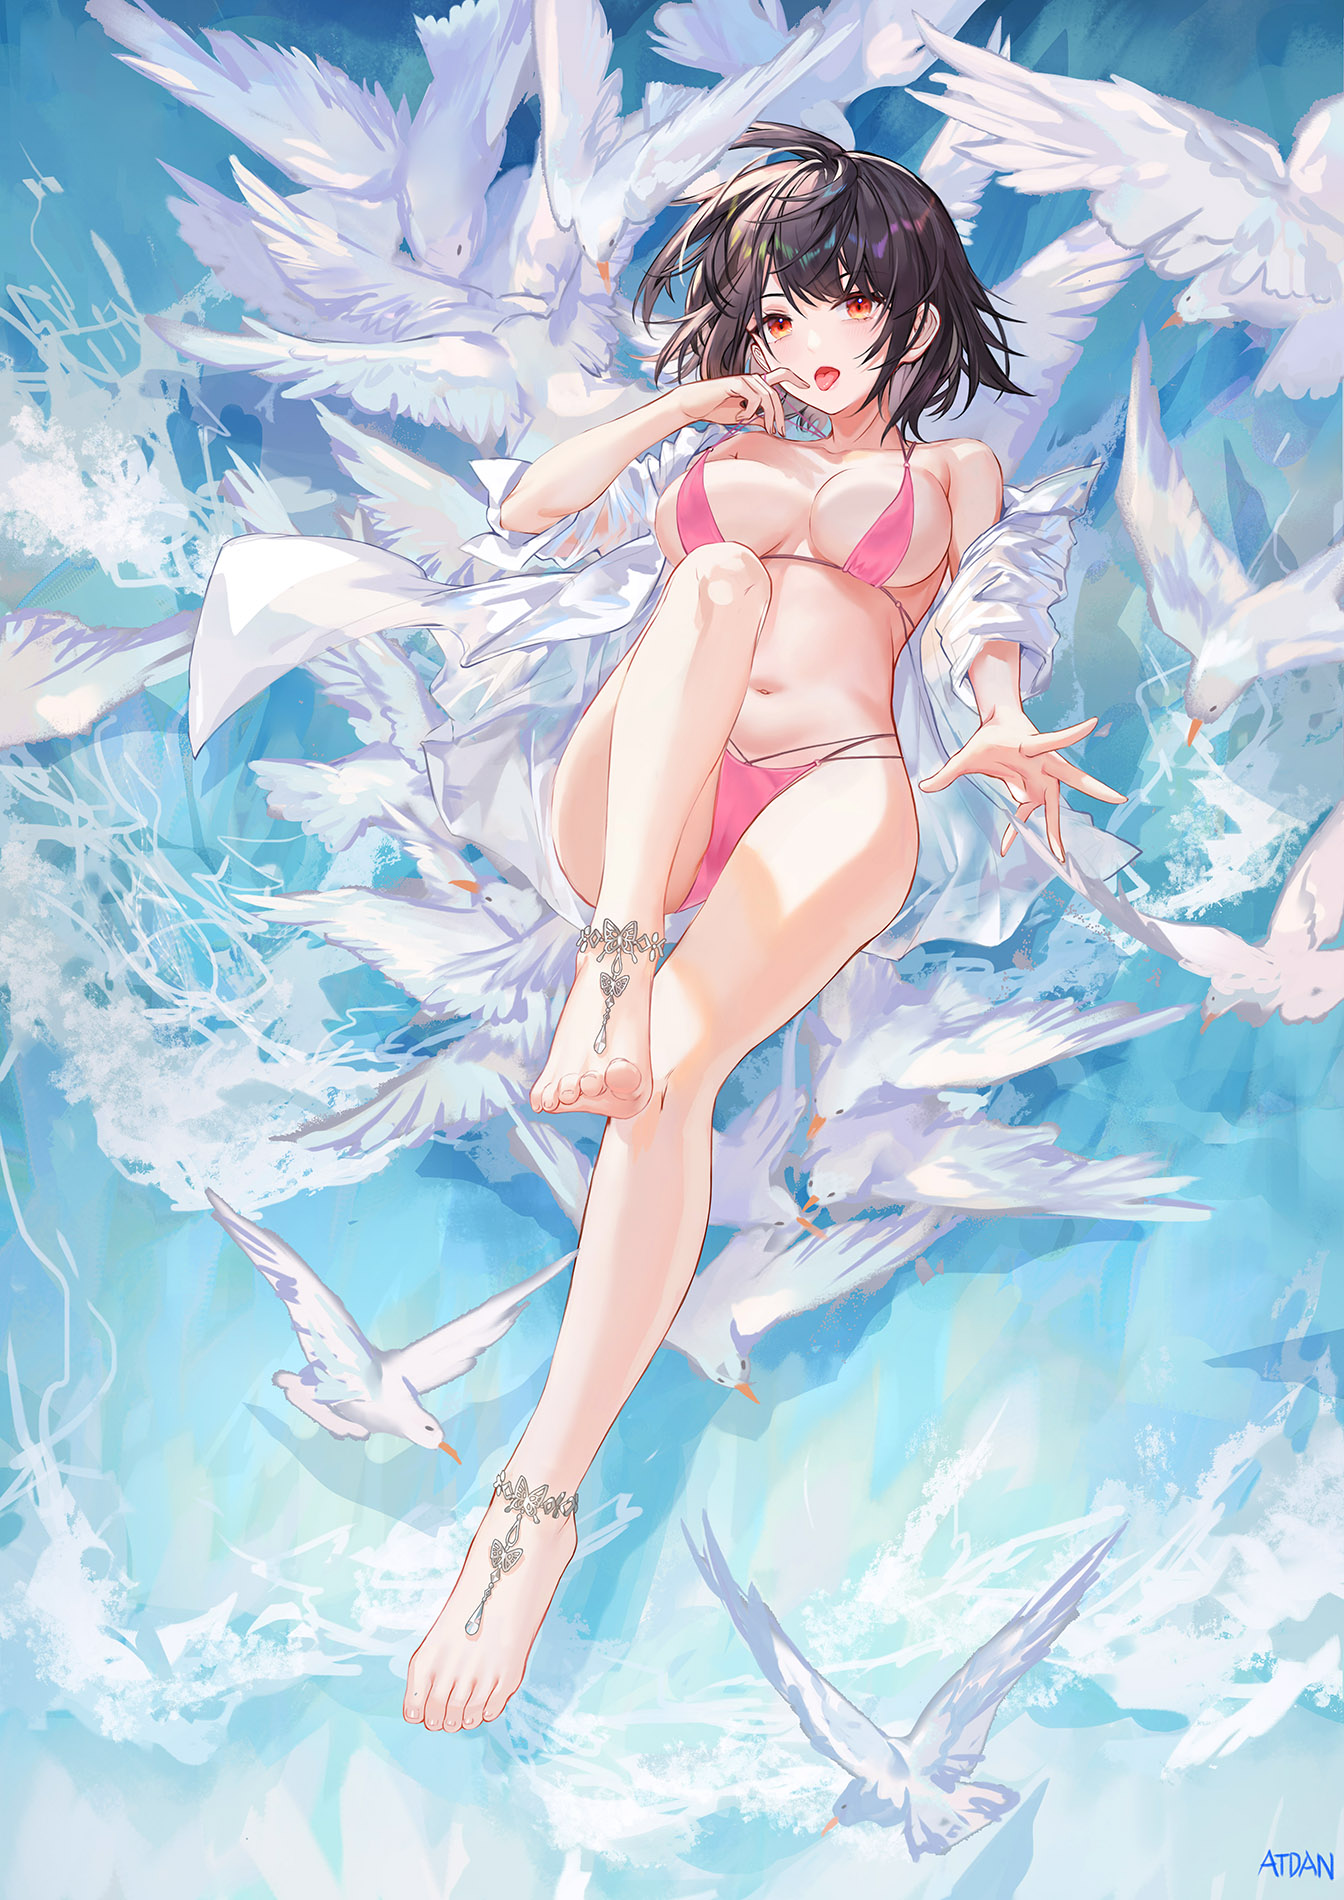 Anime 1344x1900 Atdan anime birds animals water anime girls bikini pink bikini artwork anklet feet brunette